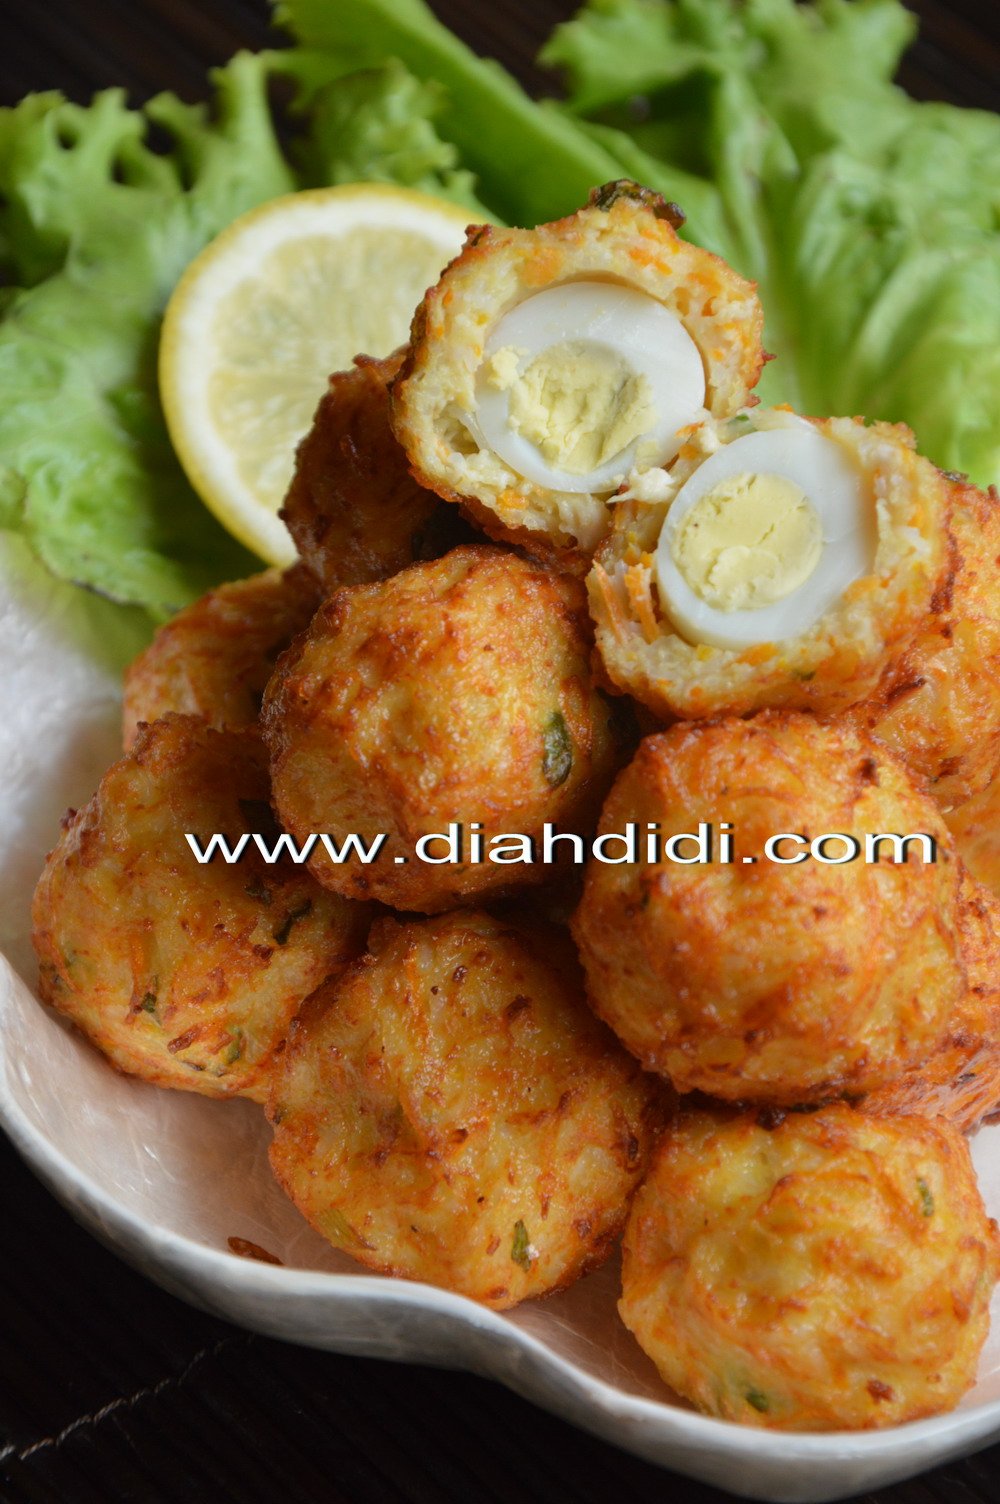  Diah  Didi  s Kitchen Bakso Goreng  Ayam  Dan Bihun Isi Telur 